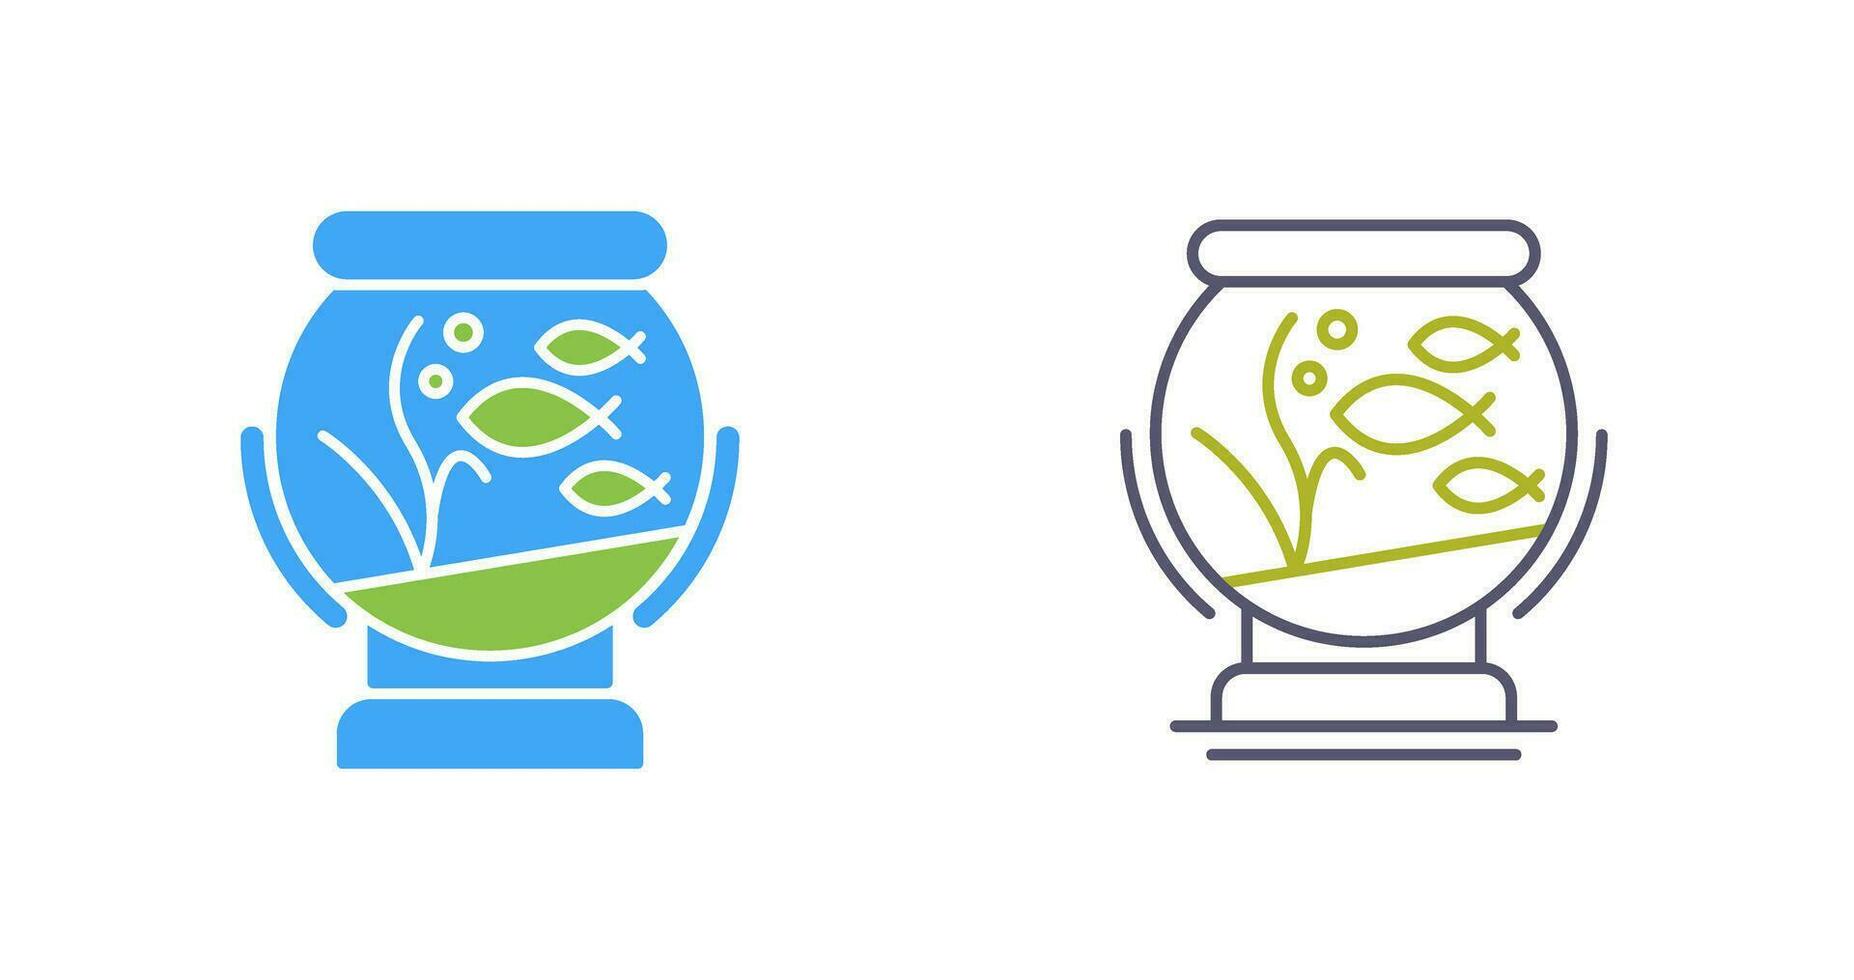 Fishbowl Vector Icon